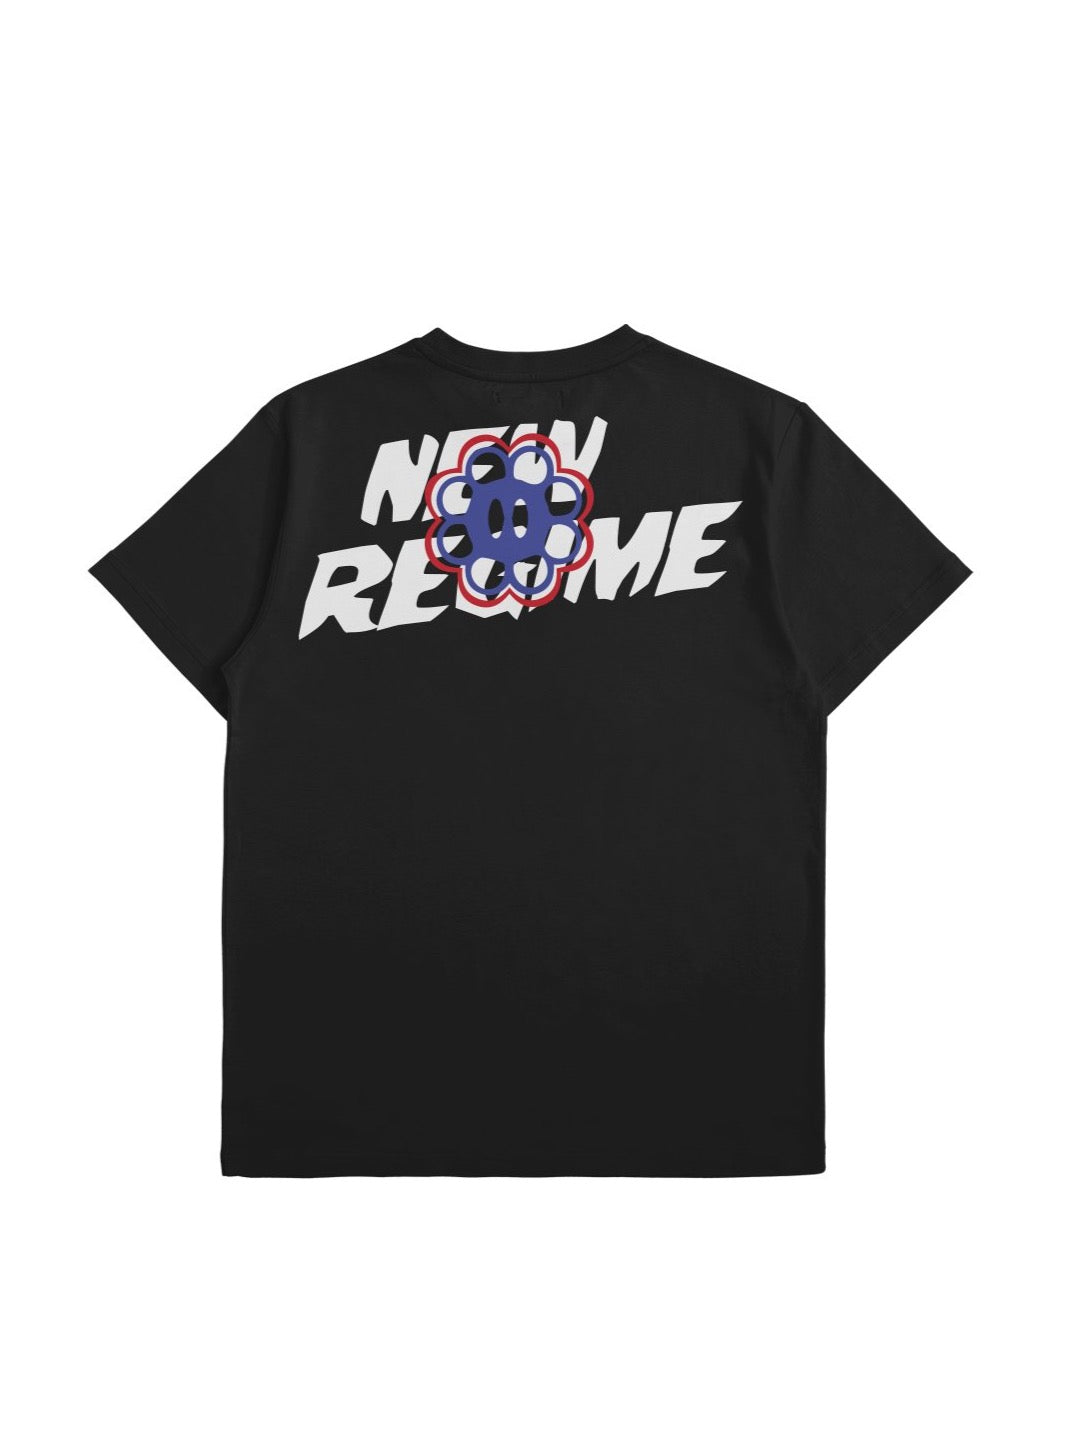 Atelier New Regime x Dutty Dario Bill Collector T-Shirt